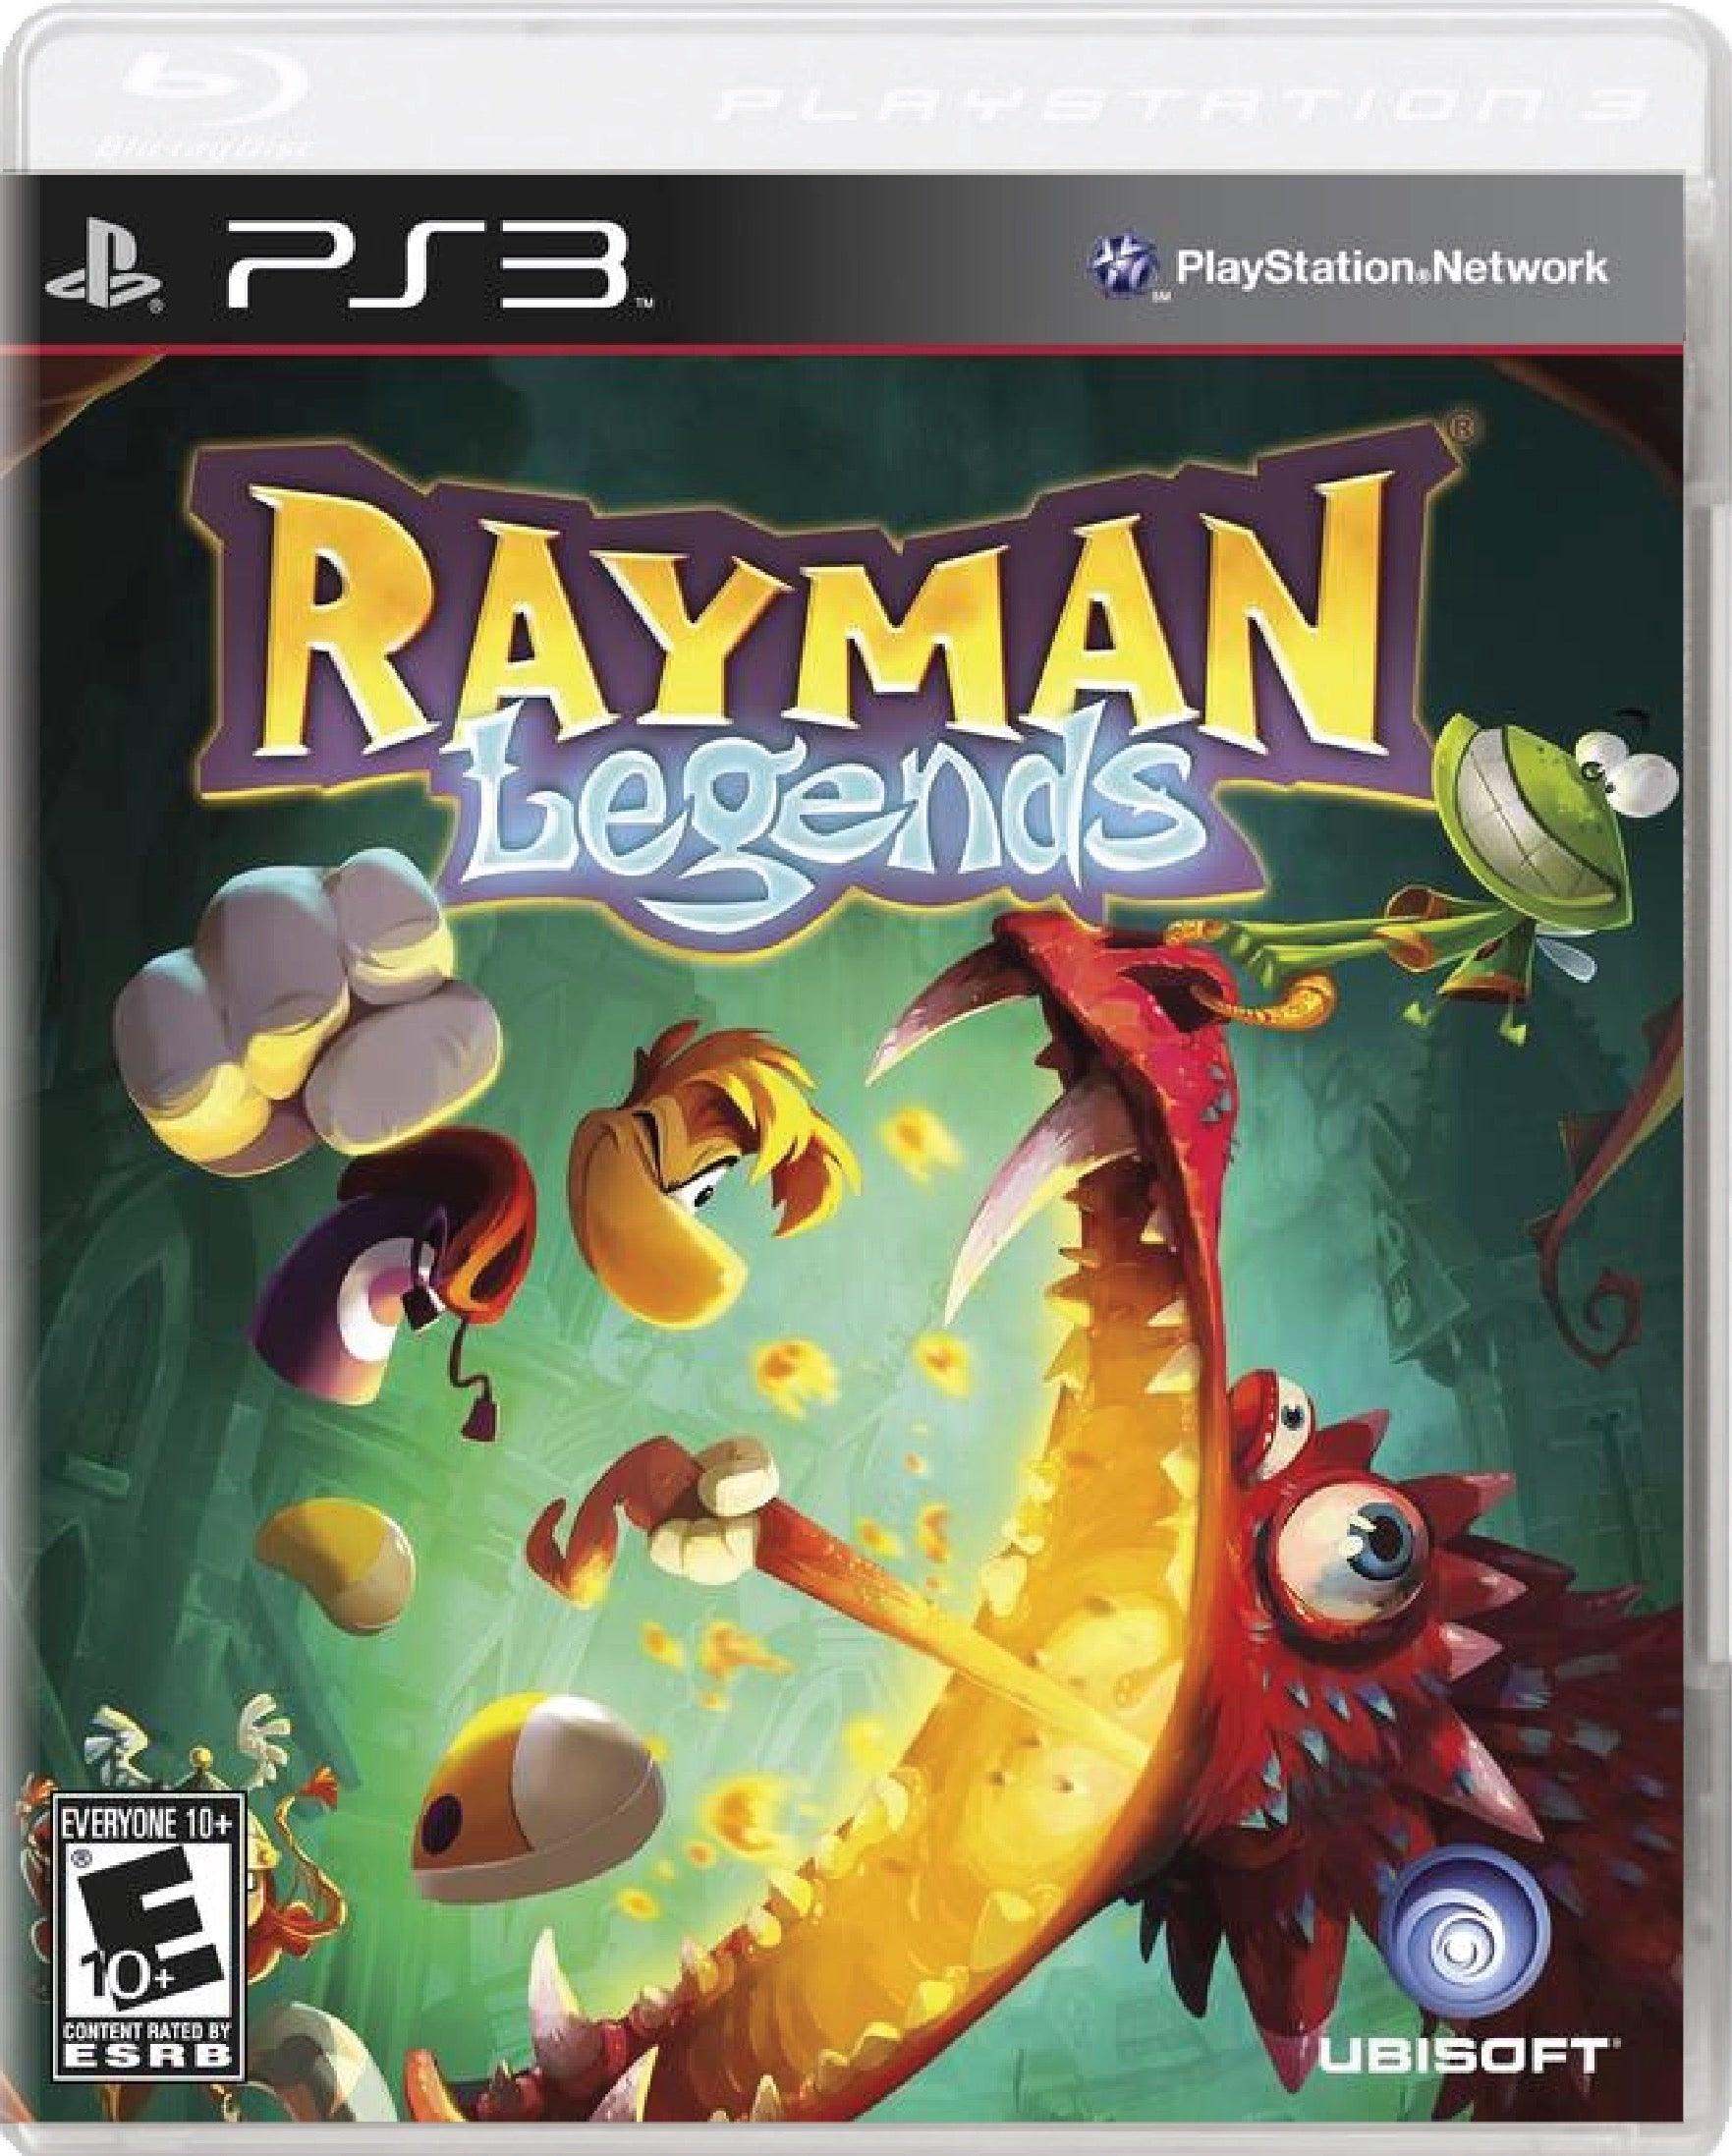 Rayman Game -  Singapore